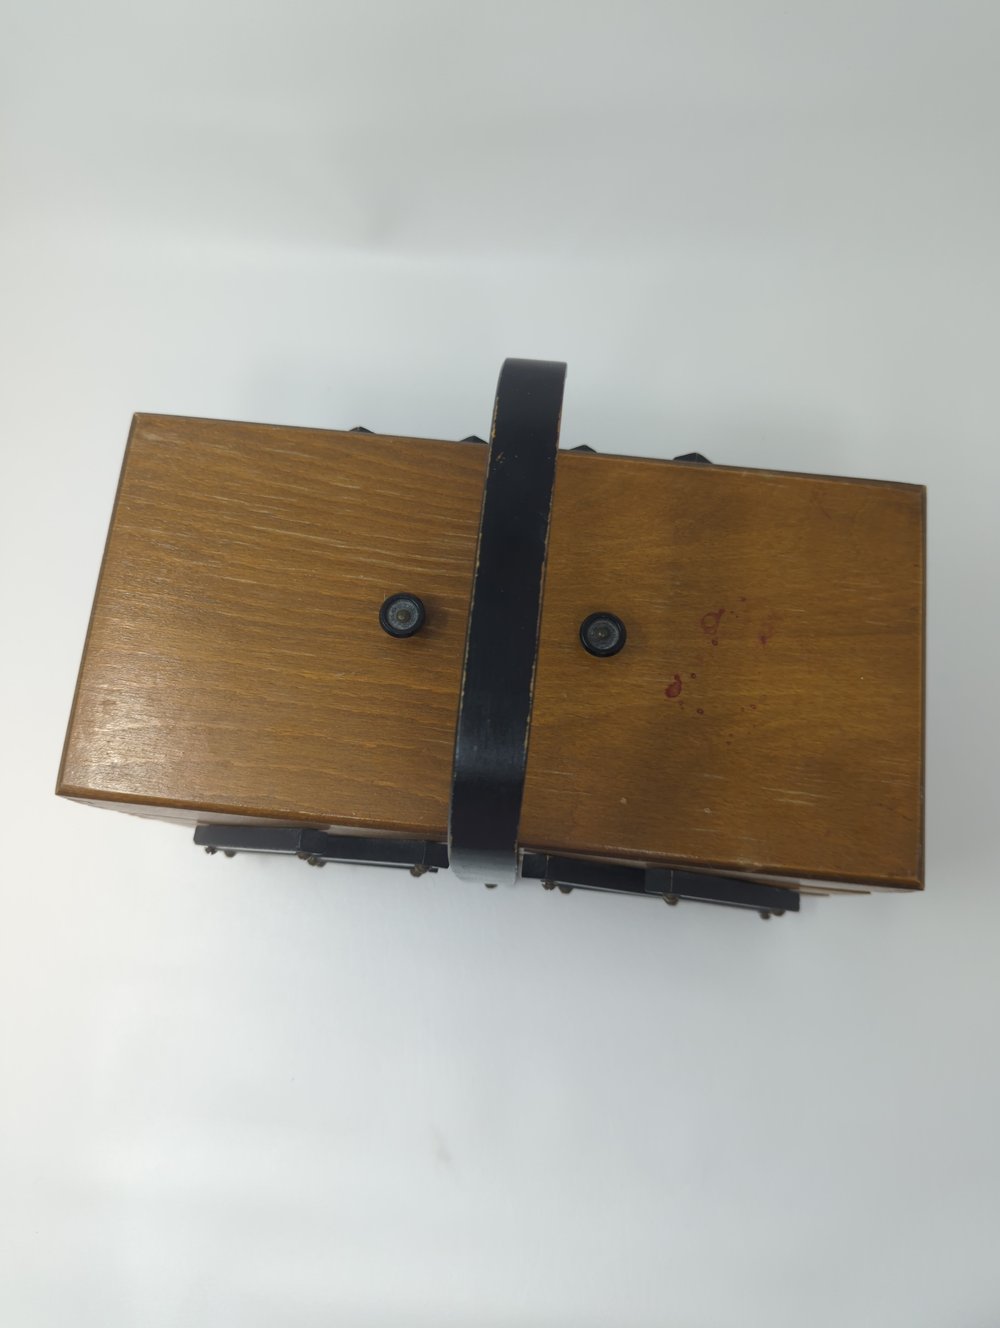 wood sewing box brown